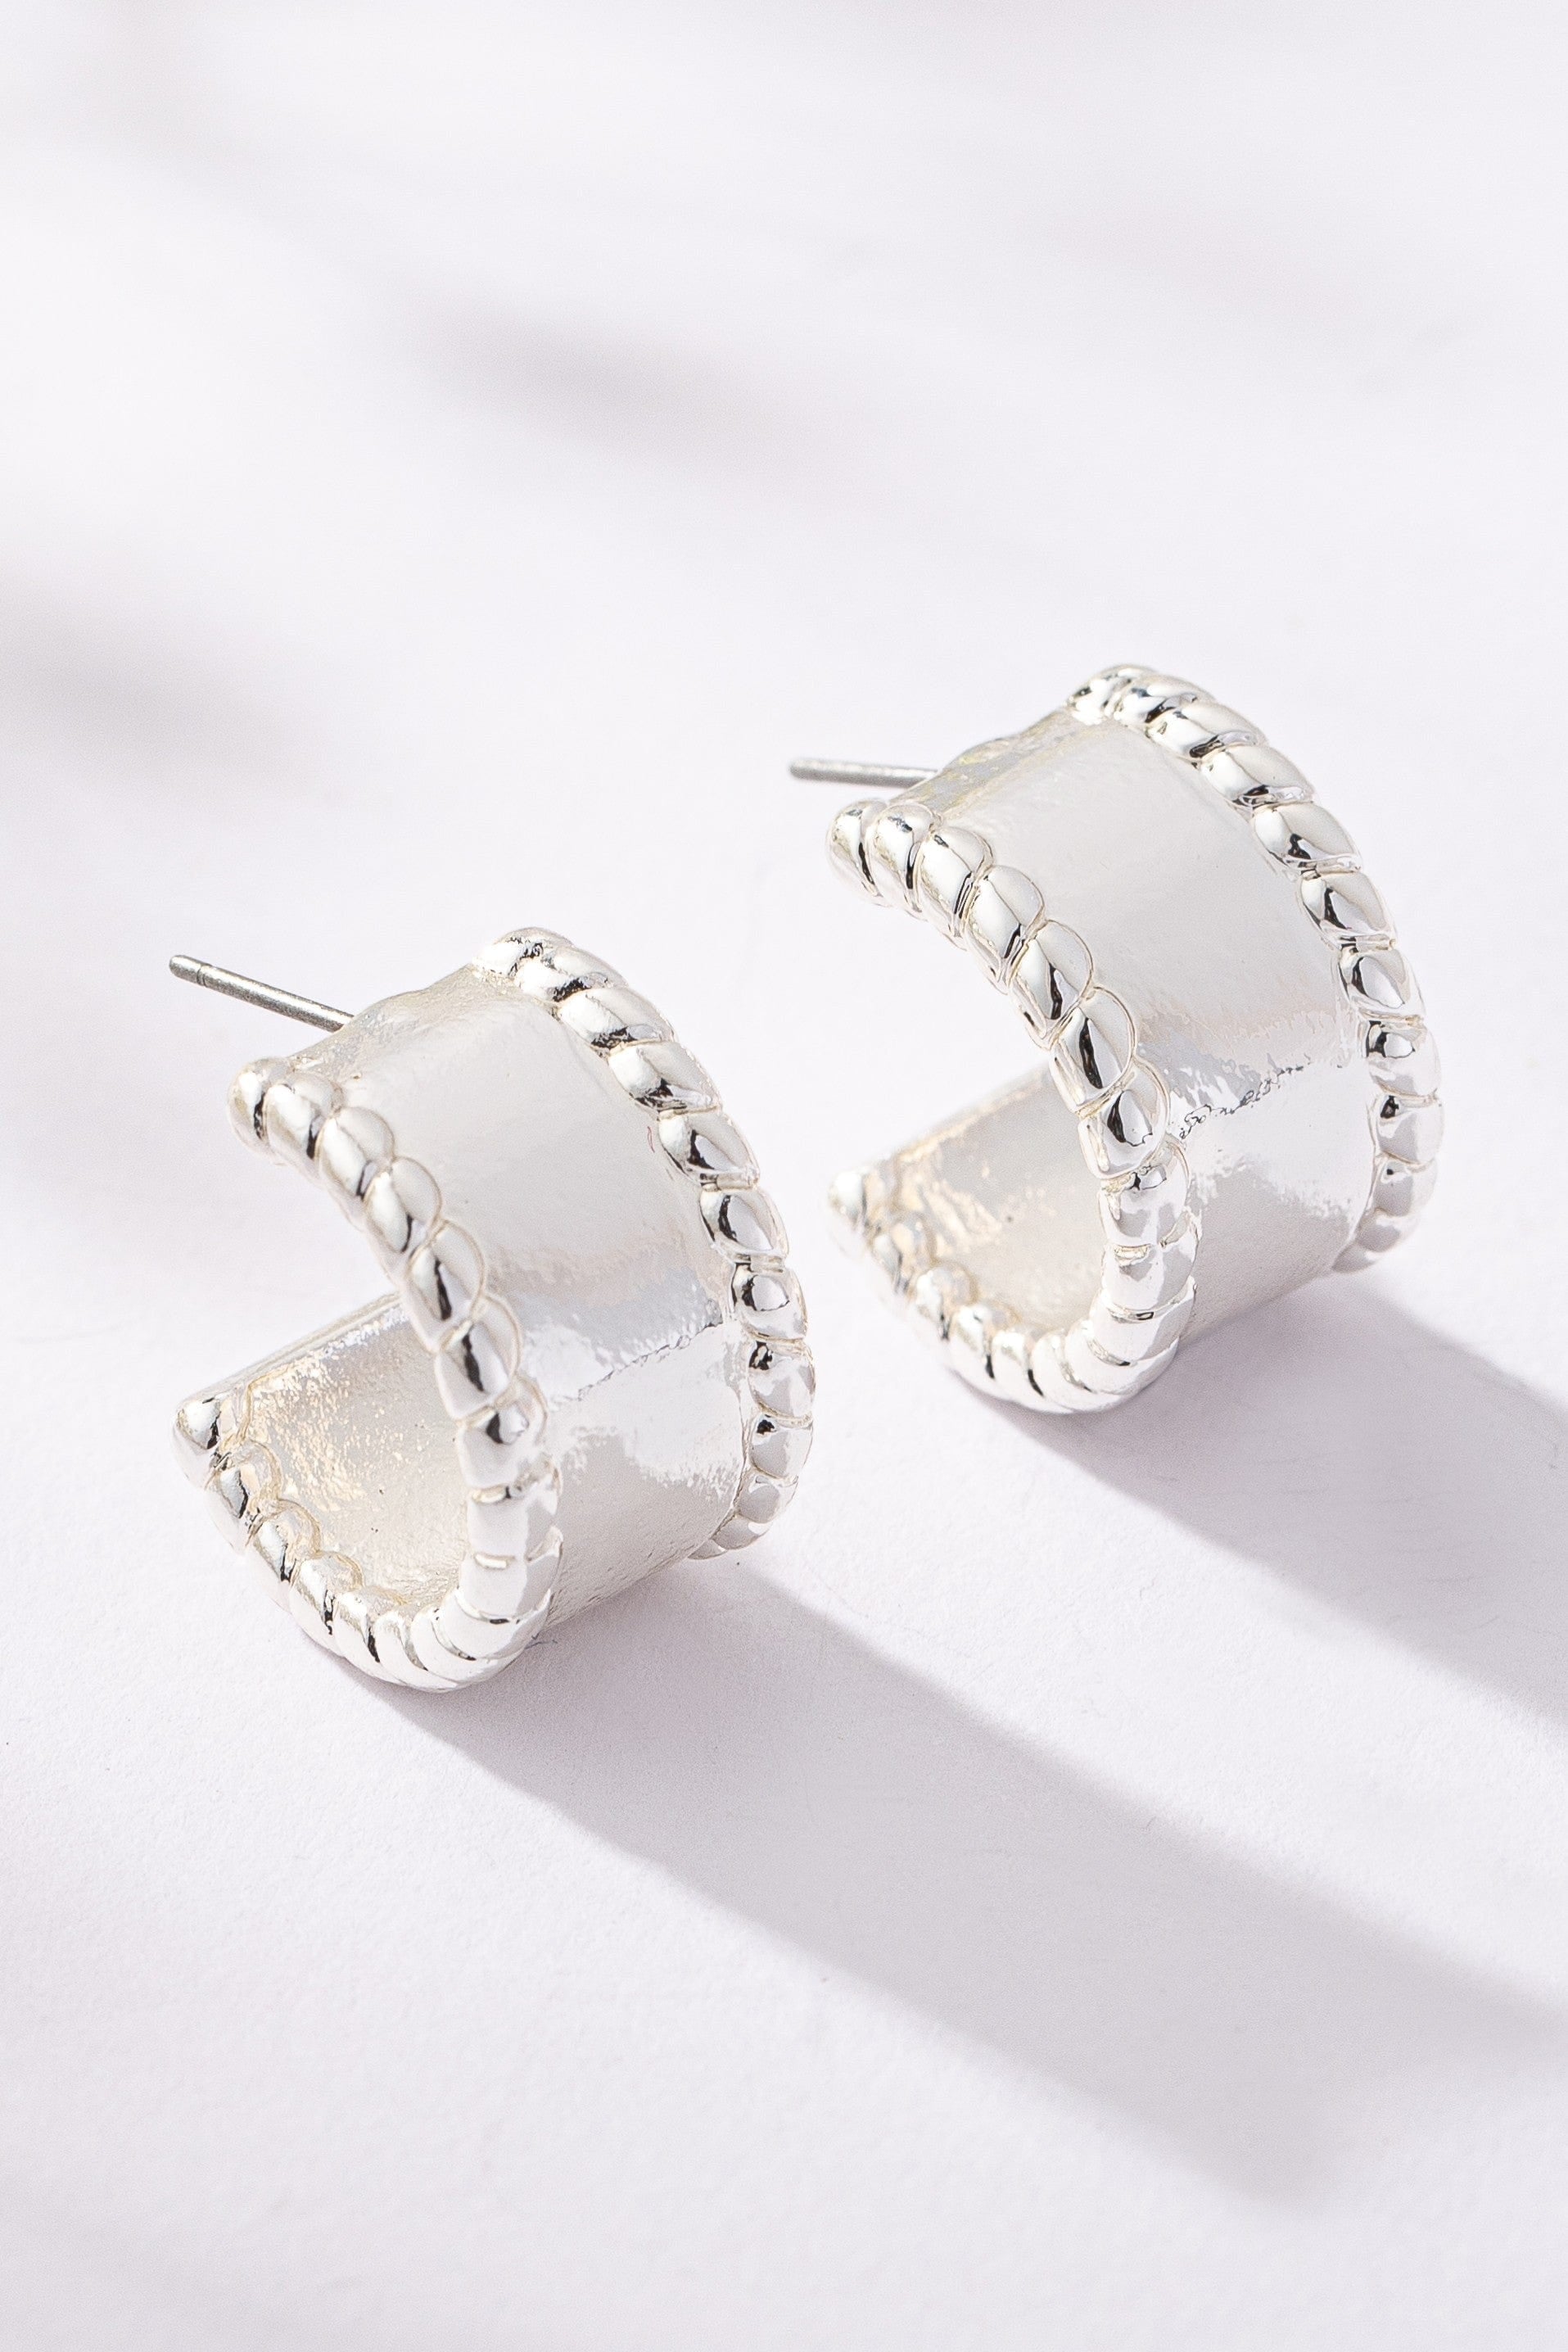 LA3accessories Jewelry - Earrings Wide Textured Huggie Hoops In Multi